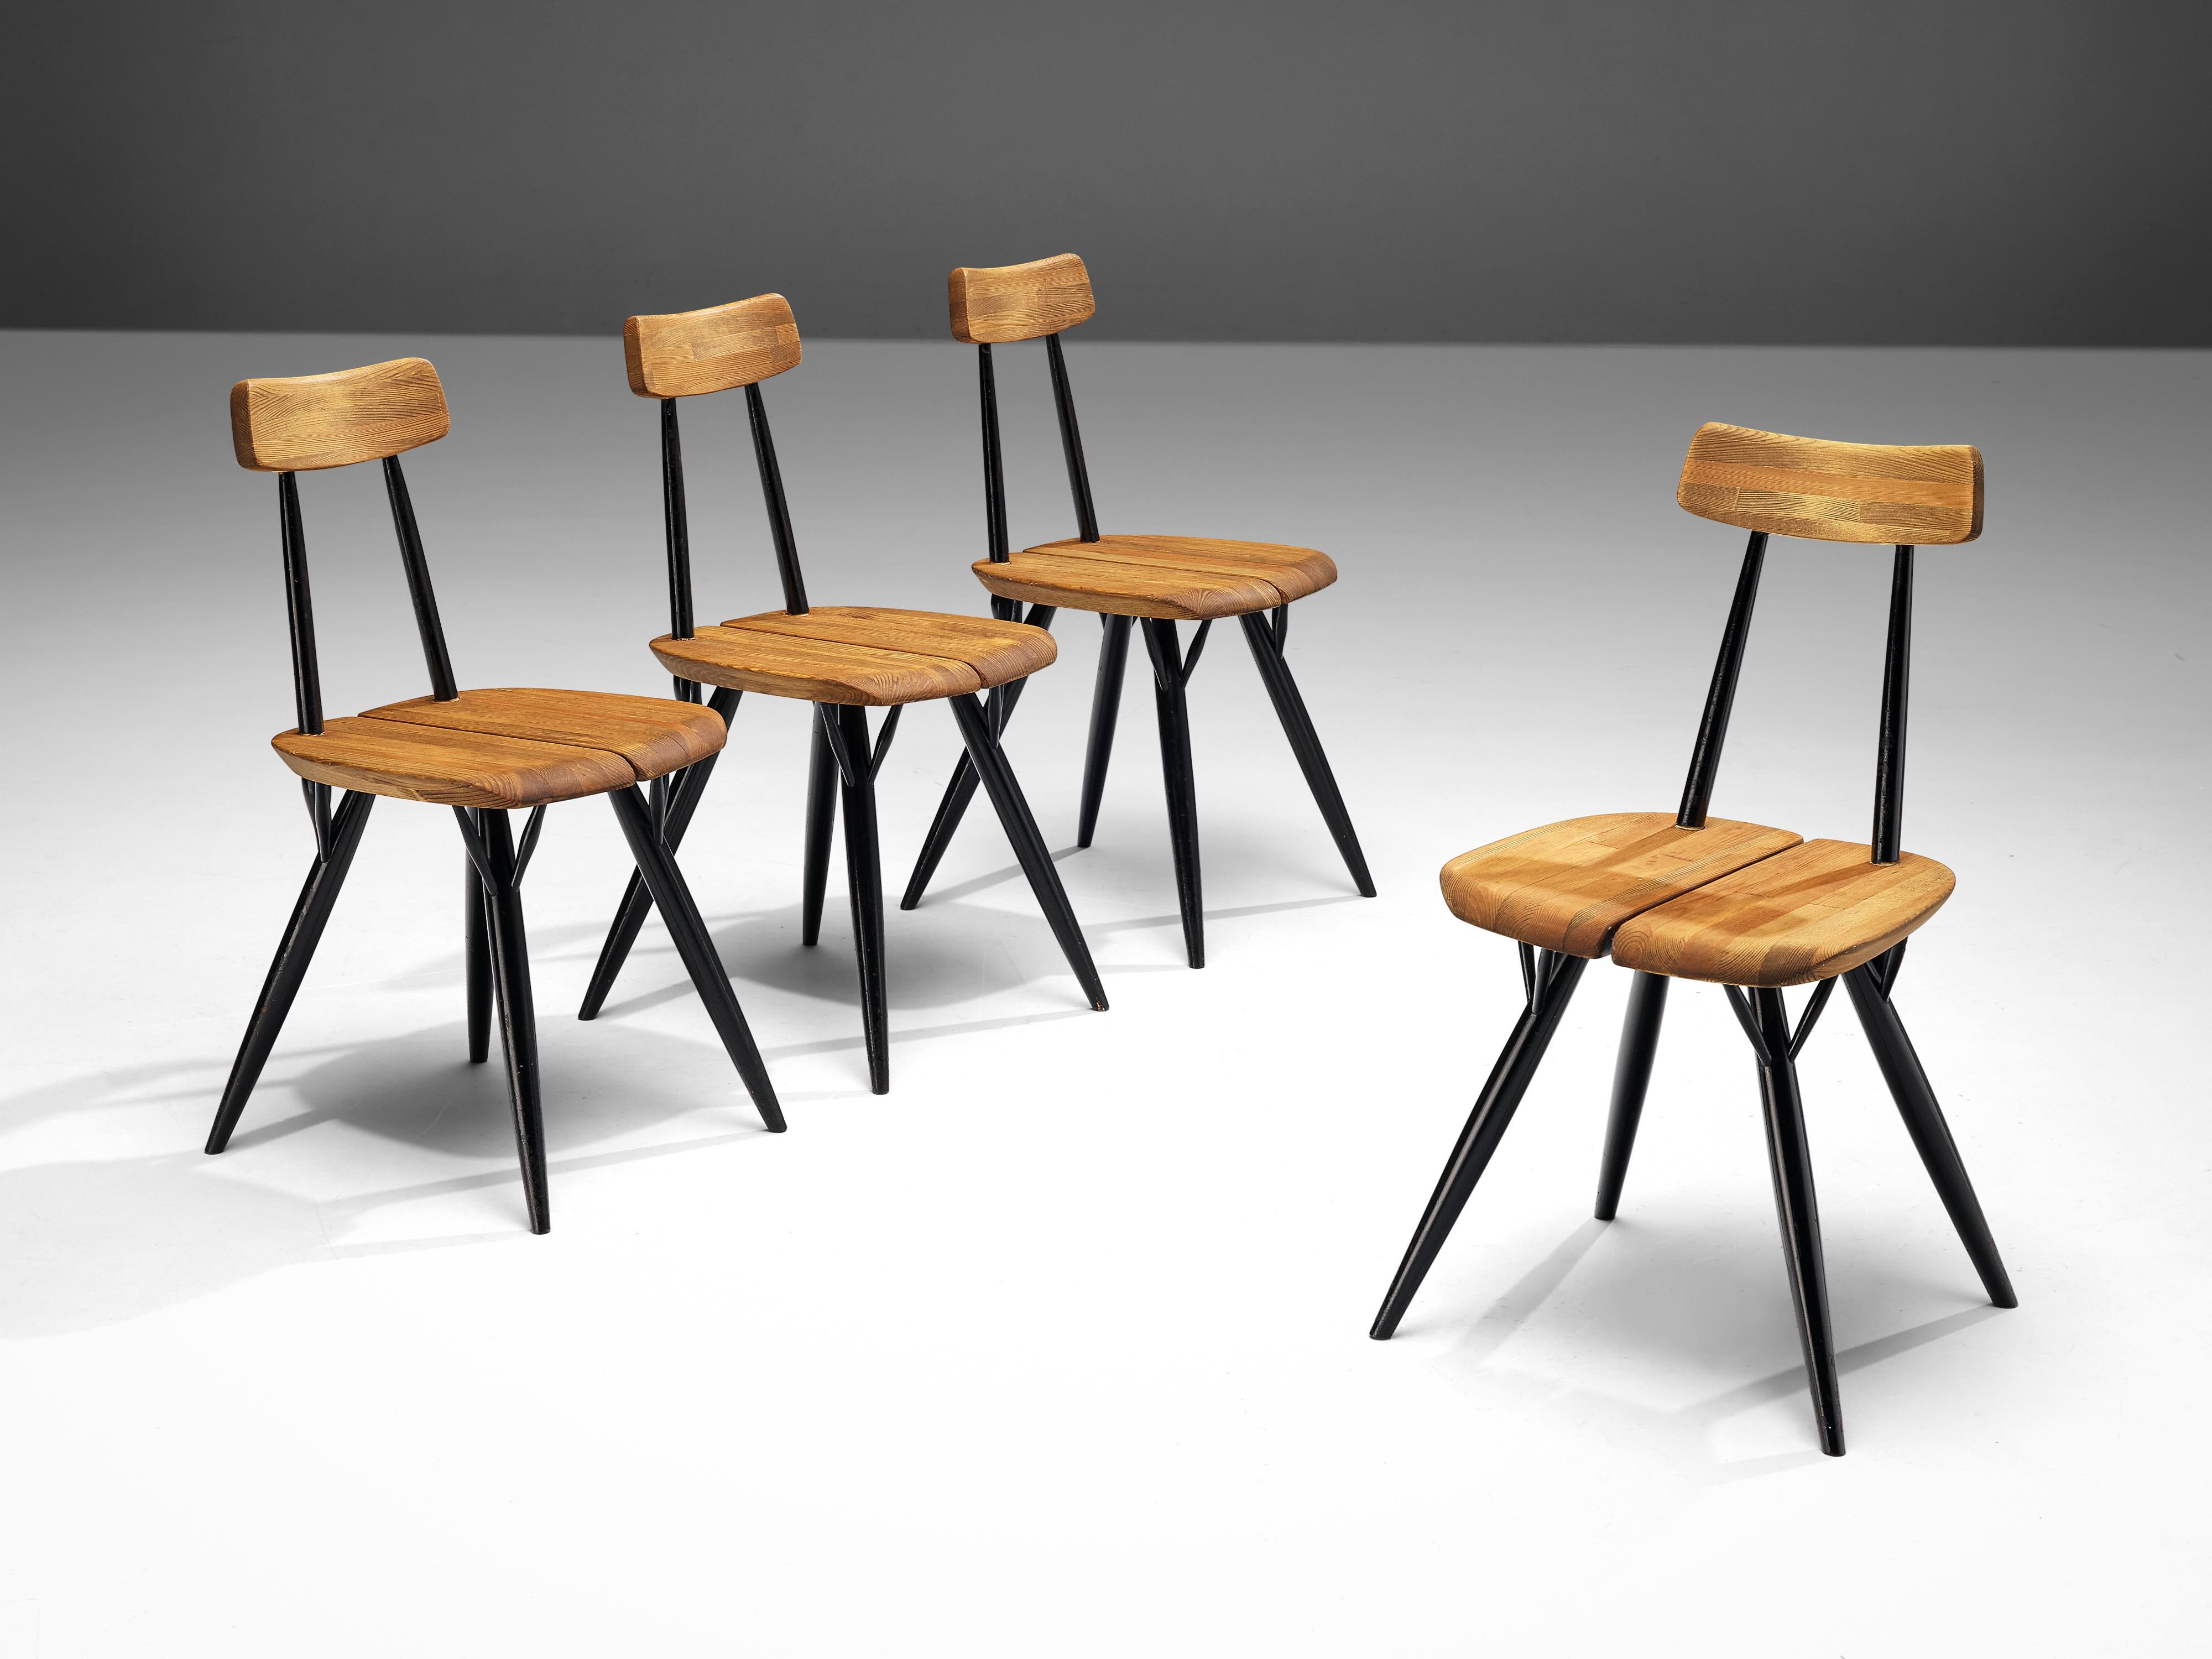 Ilmari Tapiovaara for Laukaan Puu, set of four 'Pirkka' dining chairs, beech, pine, Finland, design 1955

This set of ‘Pirkka’ chairs by Finish designer Ilmari Tapiovaara was designed in the late 1950s, and is part of a series of furniture. The